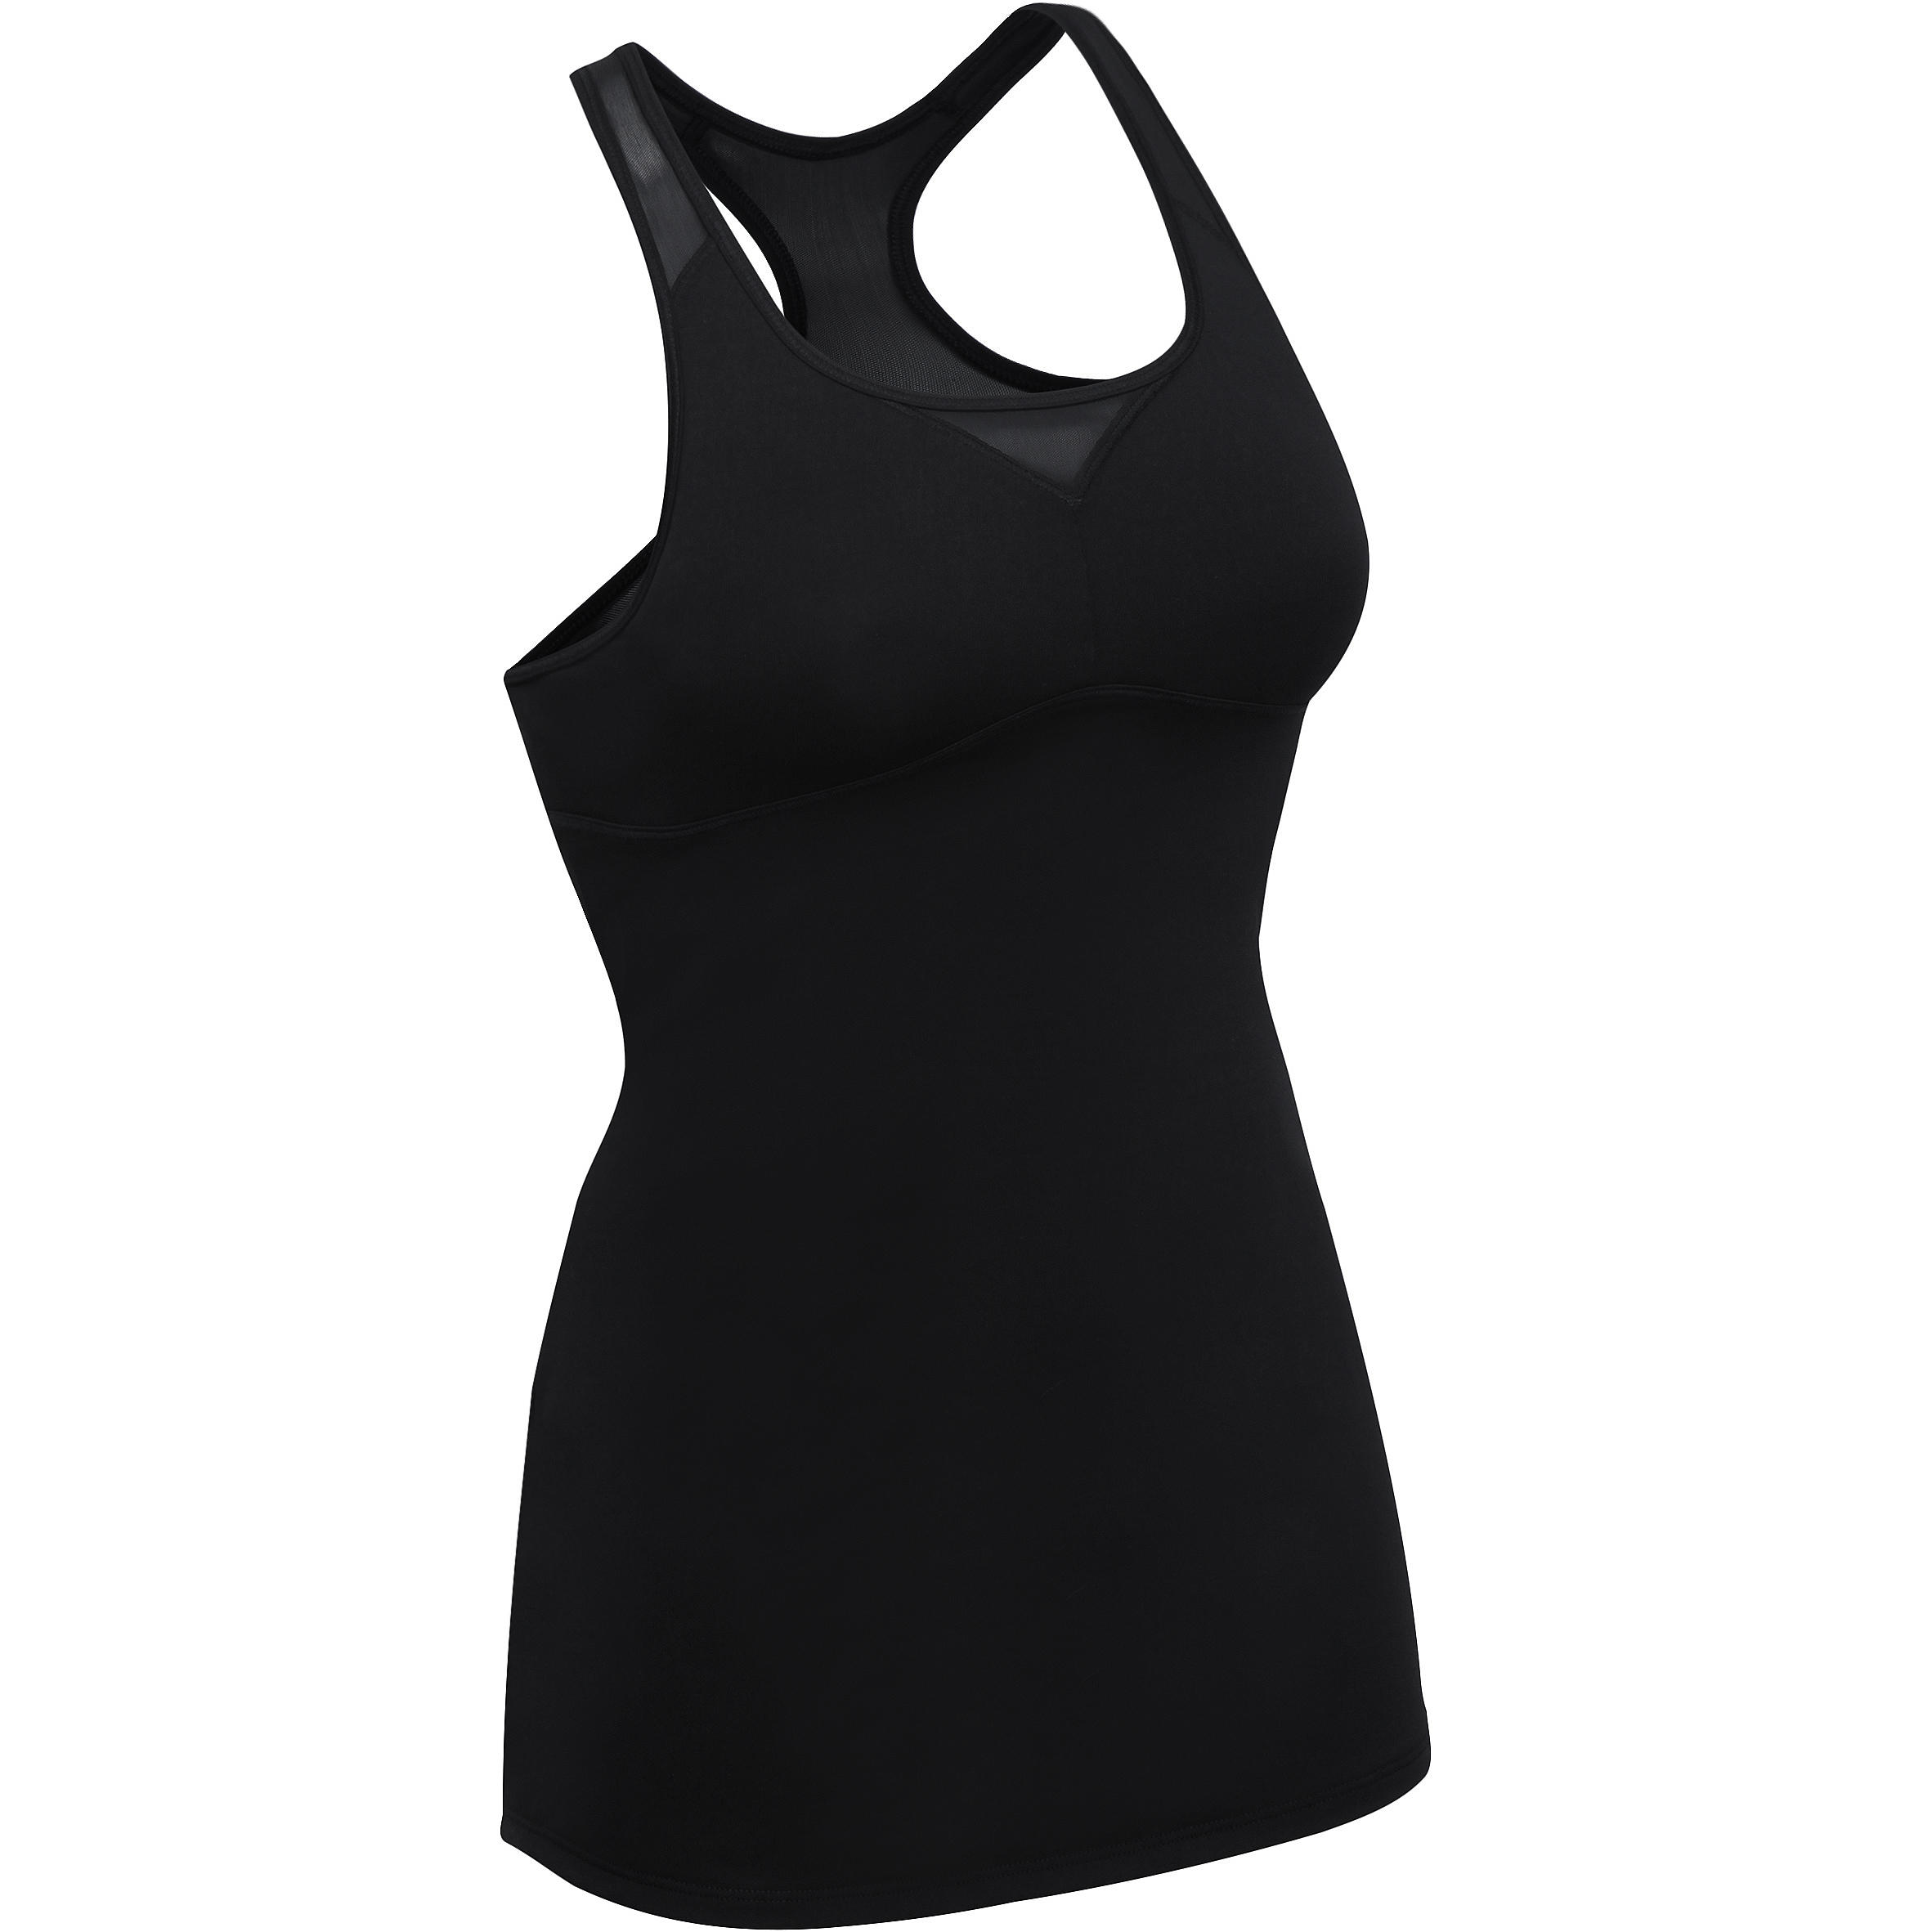 DOMYOS Breathe Women's Fitness Tank Top with Built-in Bra - Black